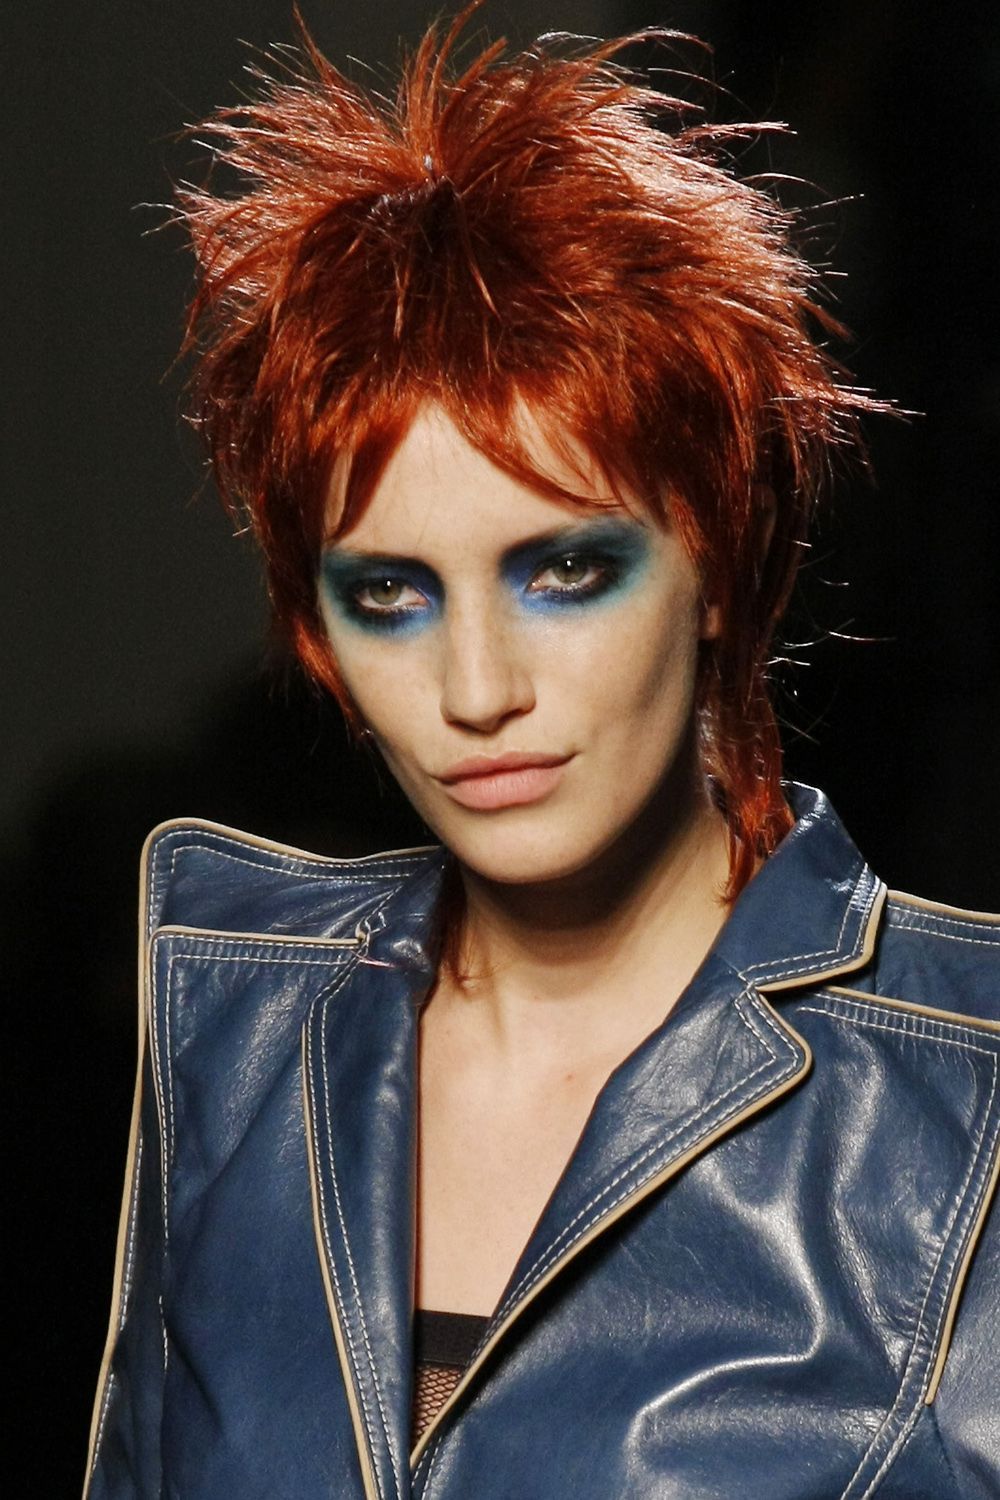 David Bowie Inspired Runway Looks - David Bowie Inspired Runway Looks -   17 style Rock makeup ideas